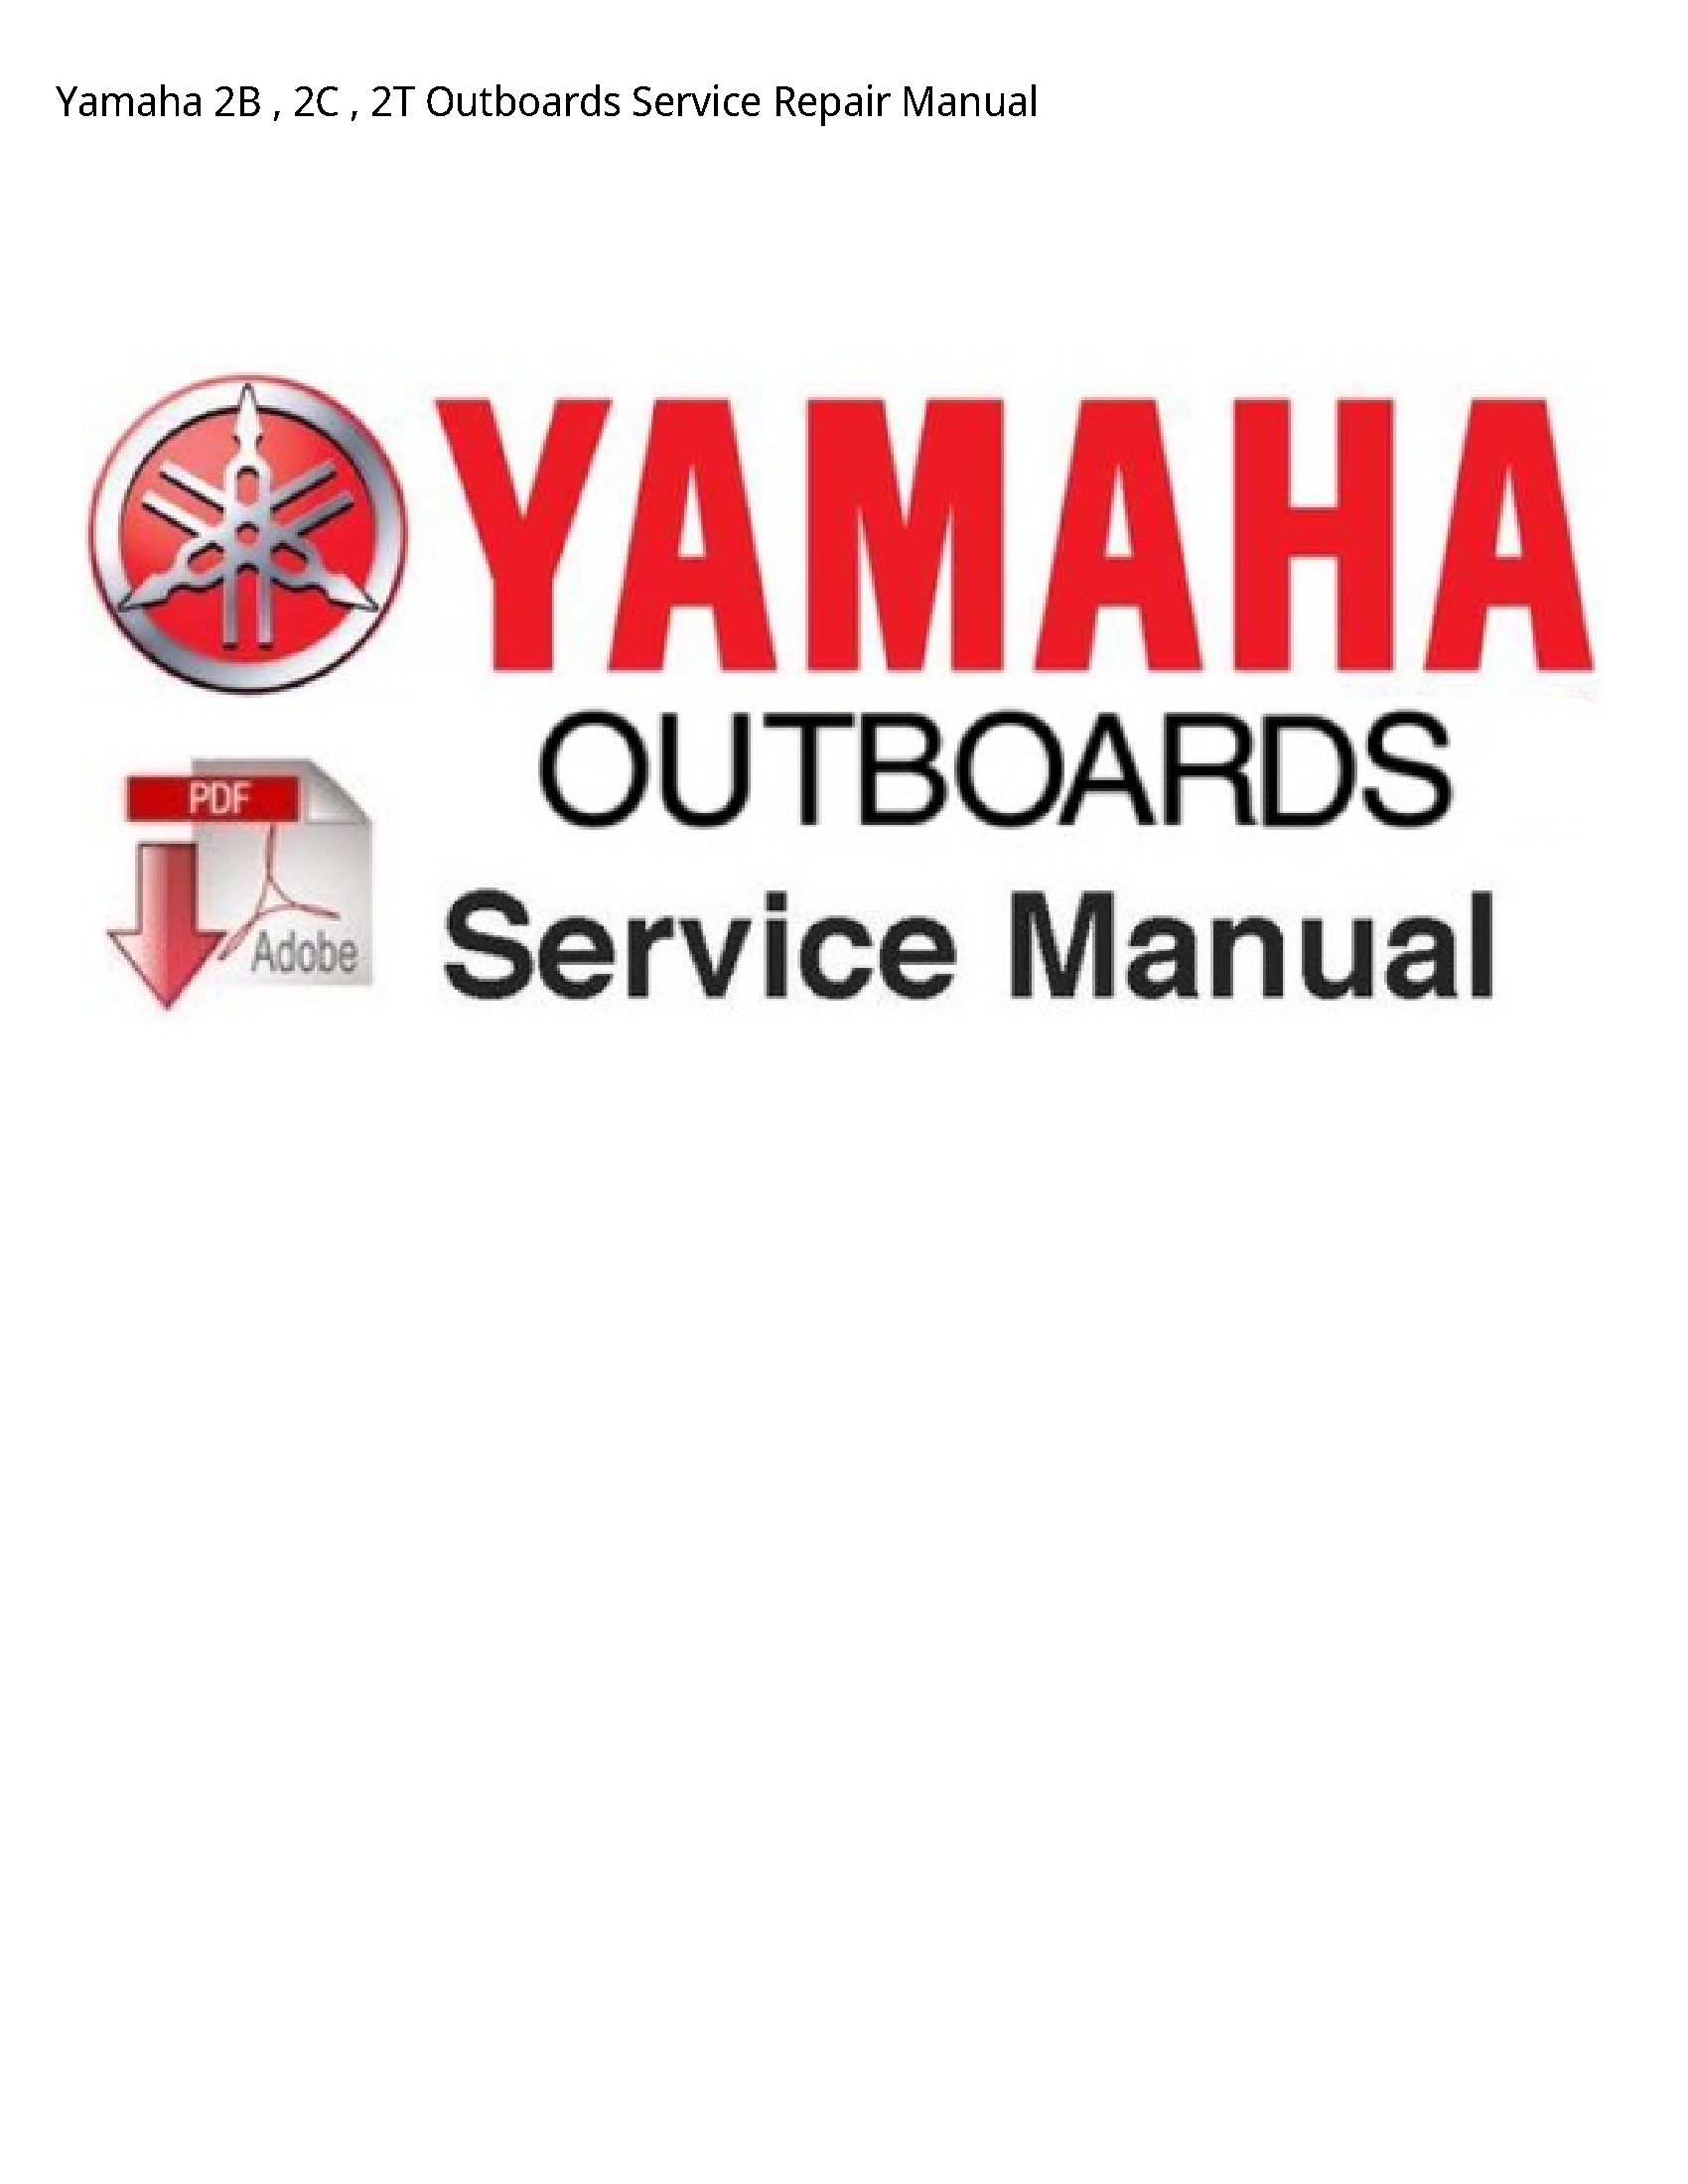 Yamaha 2B Outboards manual